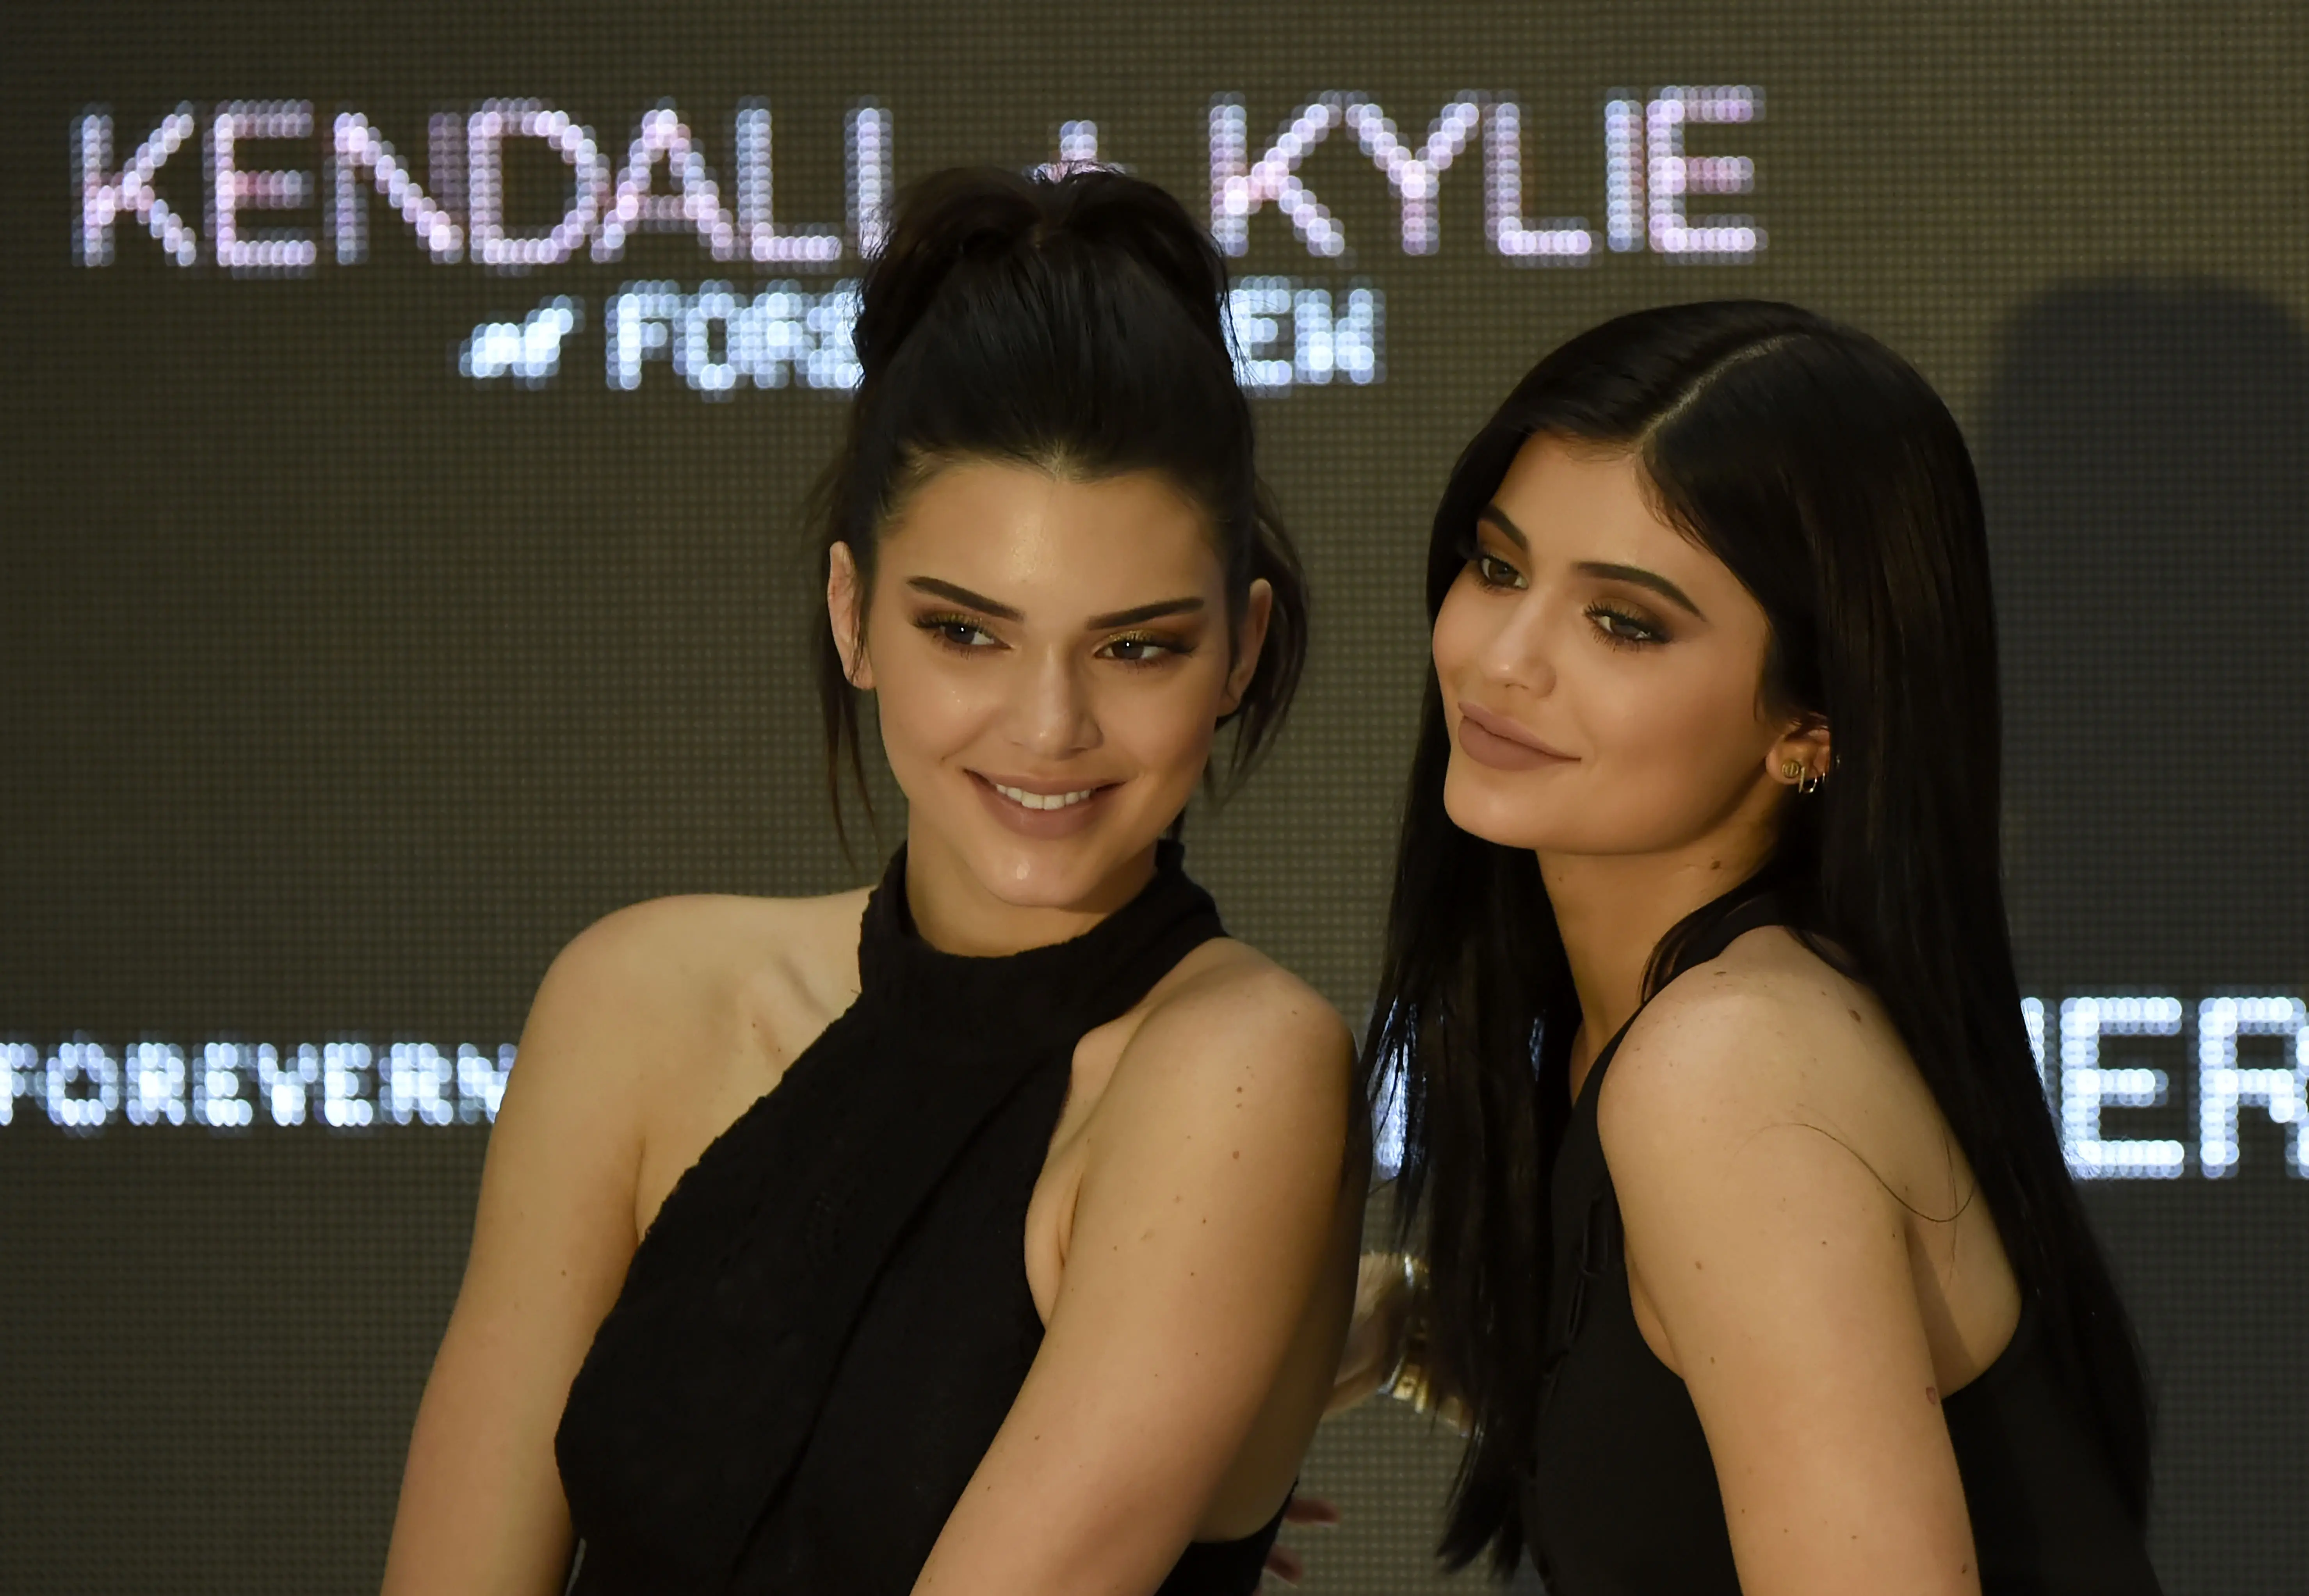 Melihat bukti eratnya persaudaraan Kylie Jenner dan Kendall Jenner. (AFP/Bintang.com)